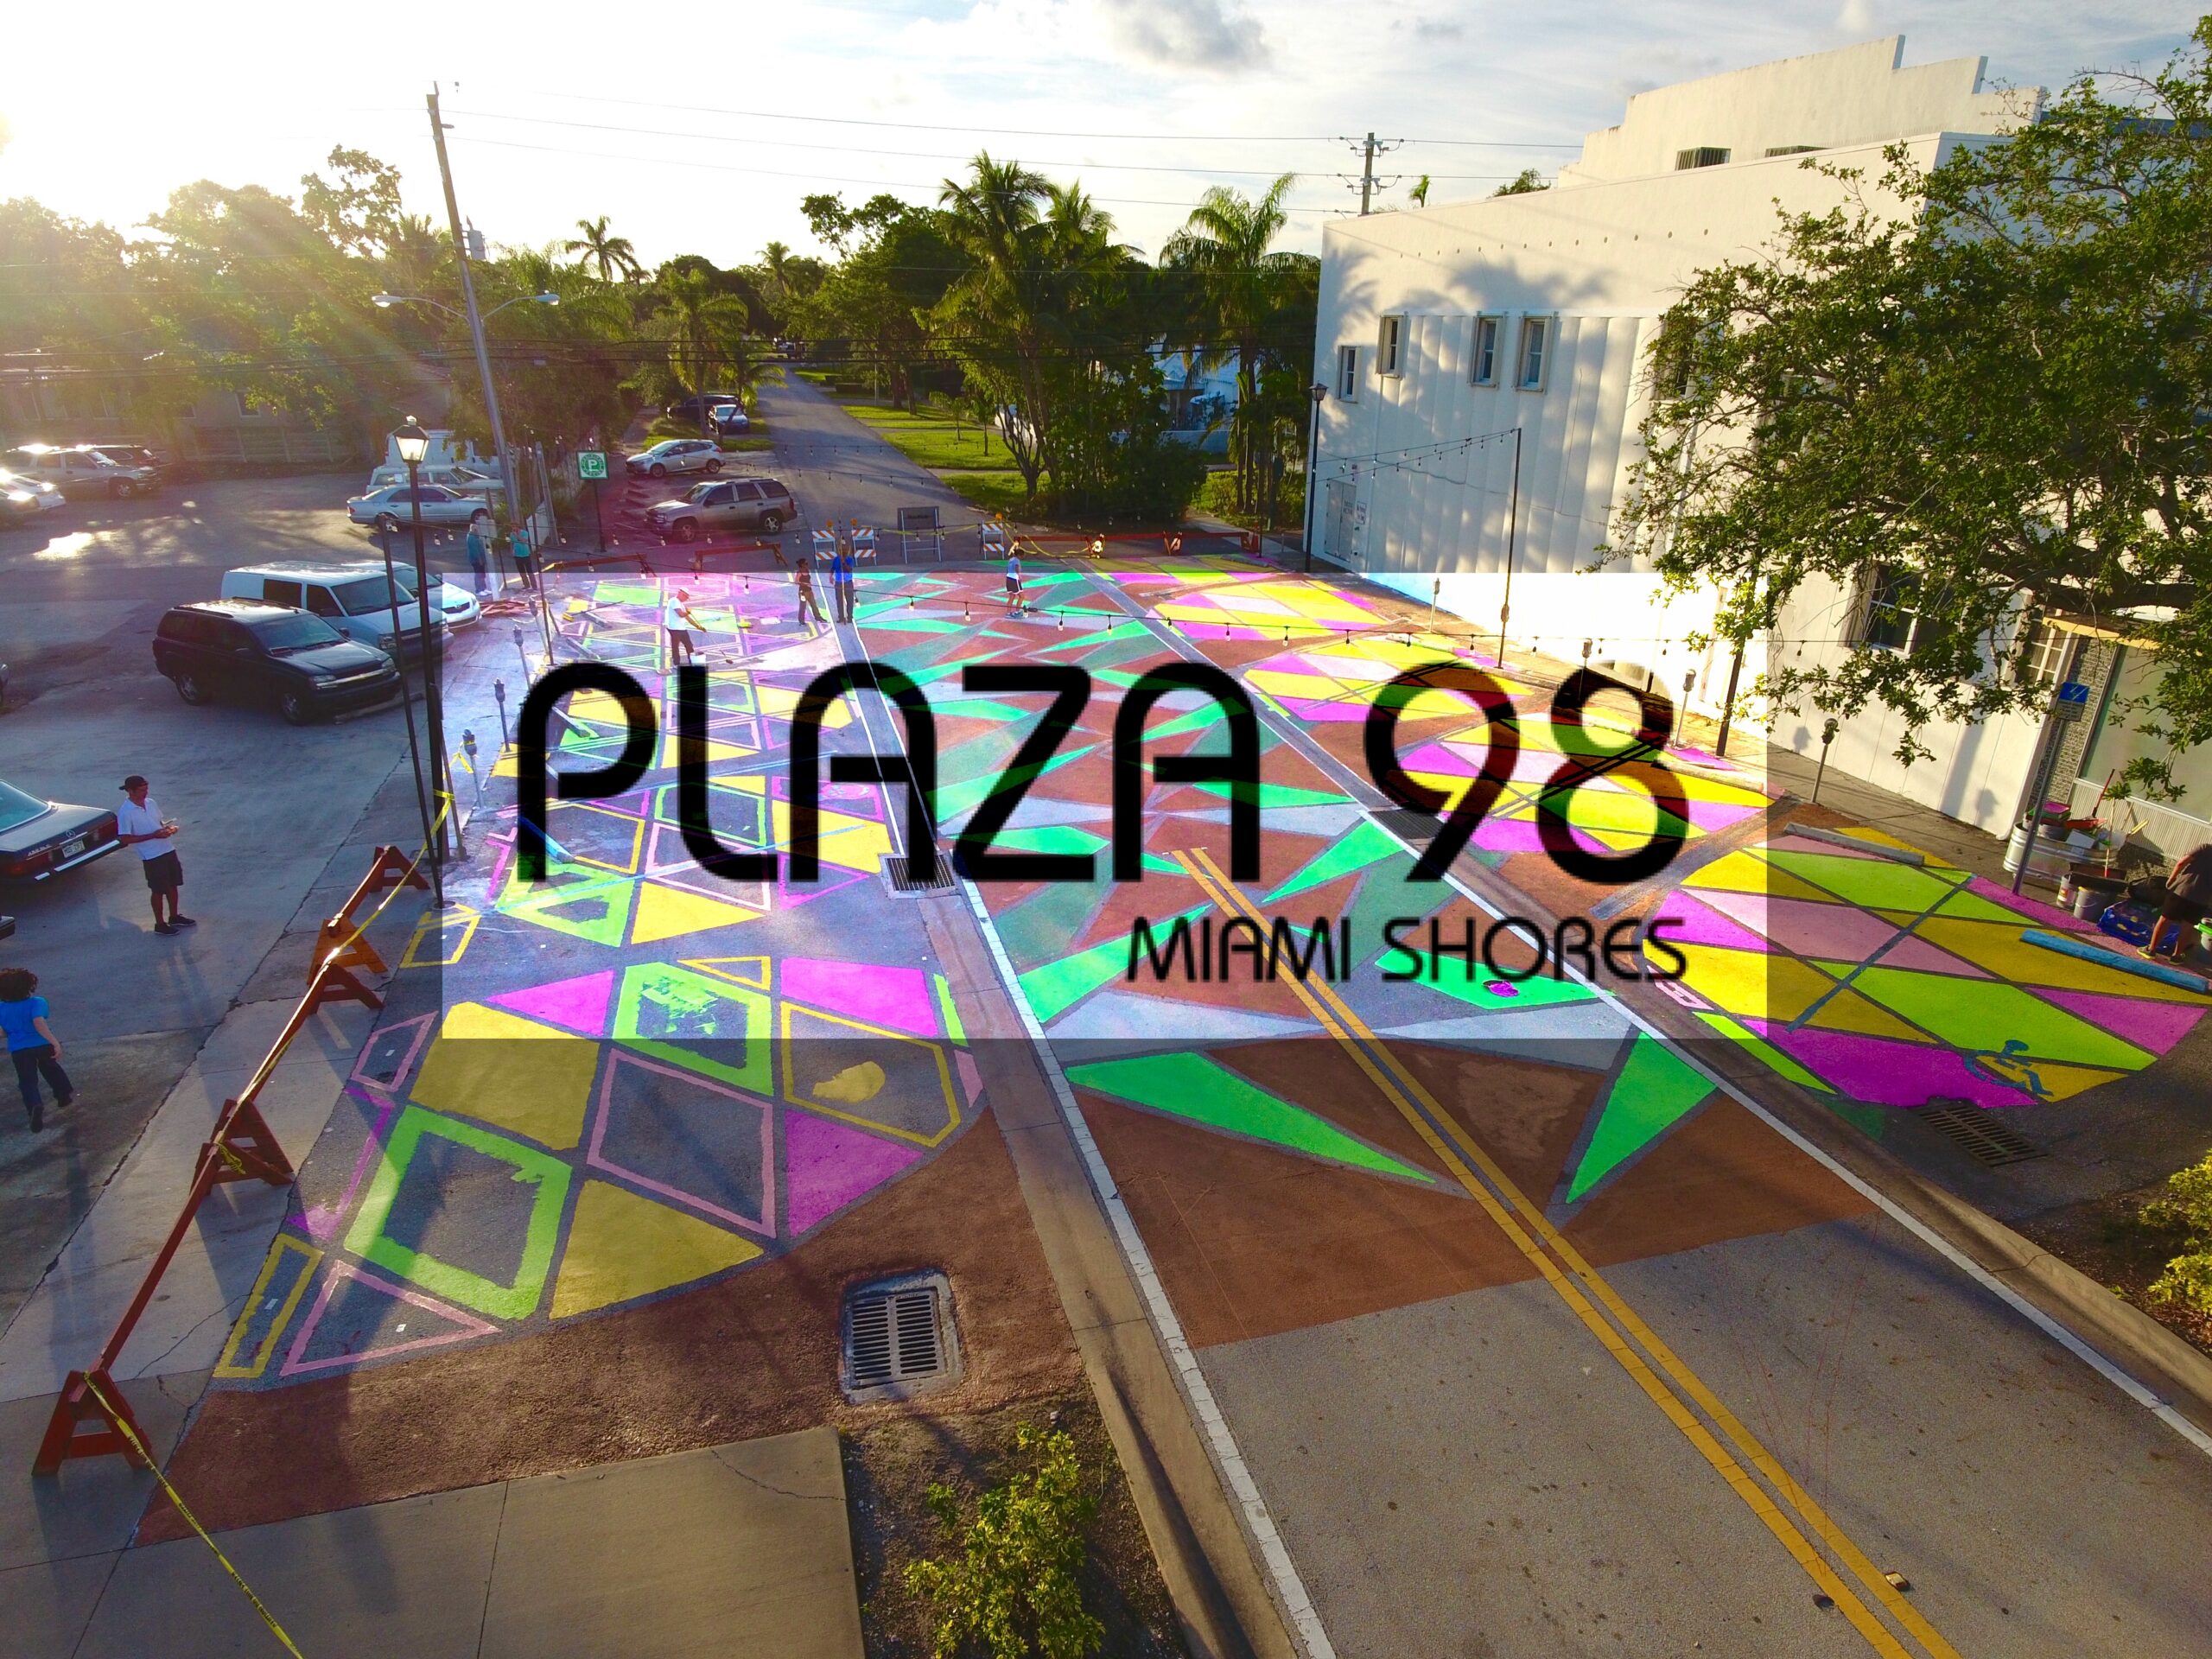 plaza-98-miami-shores-update